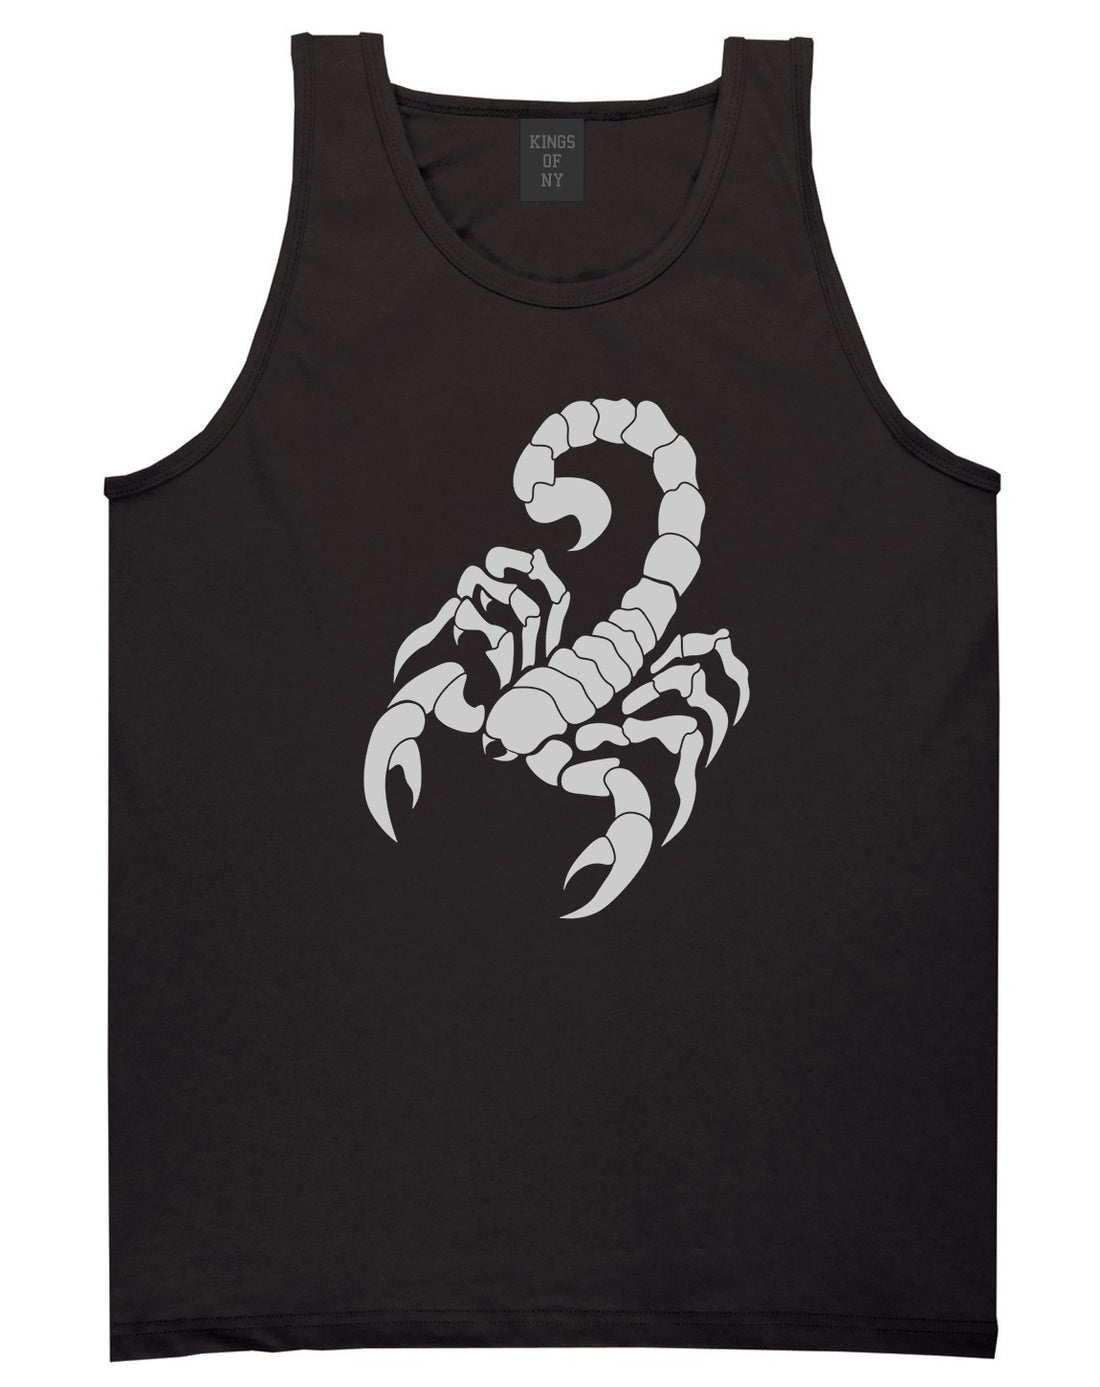 Scorpion Mens Tank Top Shirt Black by Kings Of NY